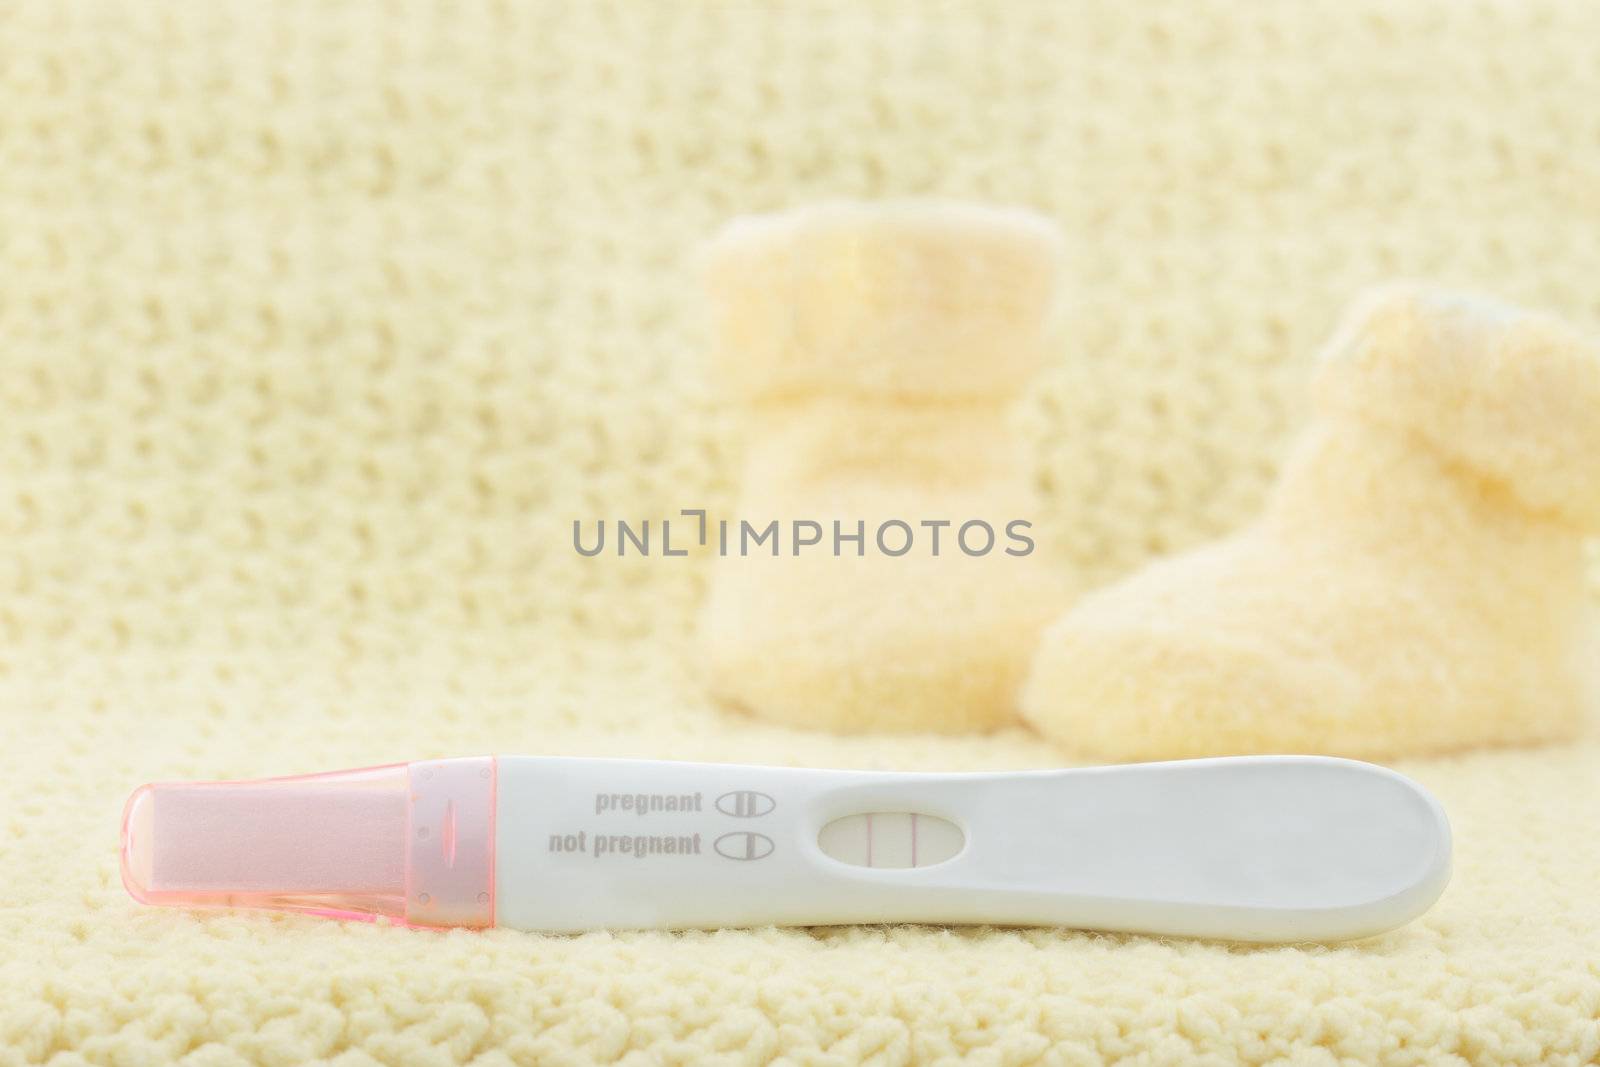 Positive Pregnancy Test by StephanieFrey